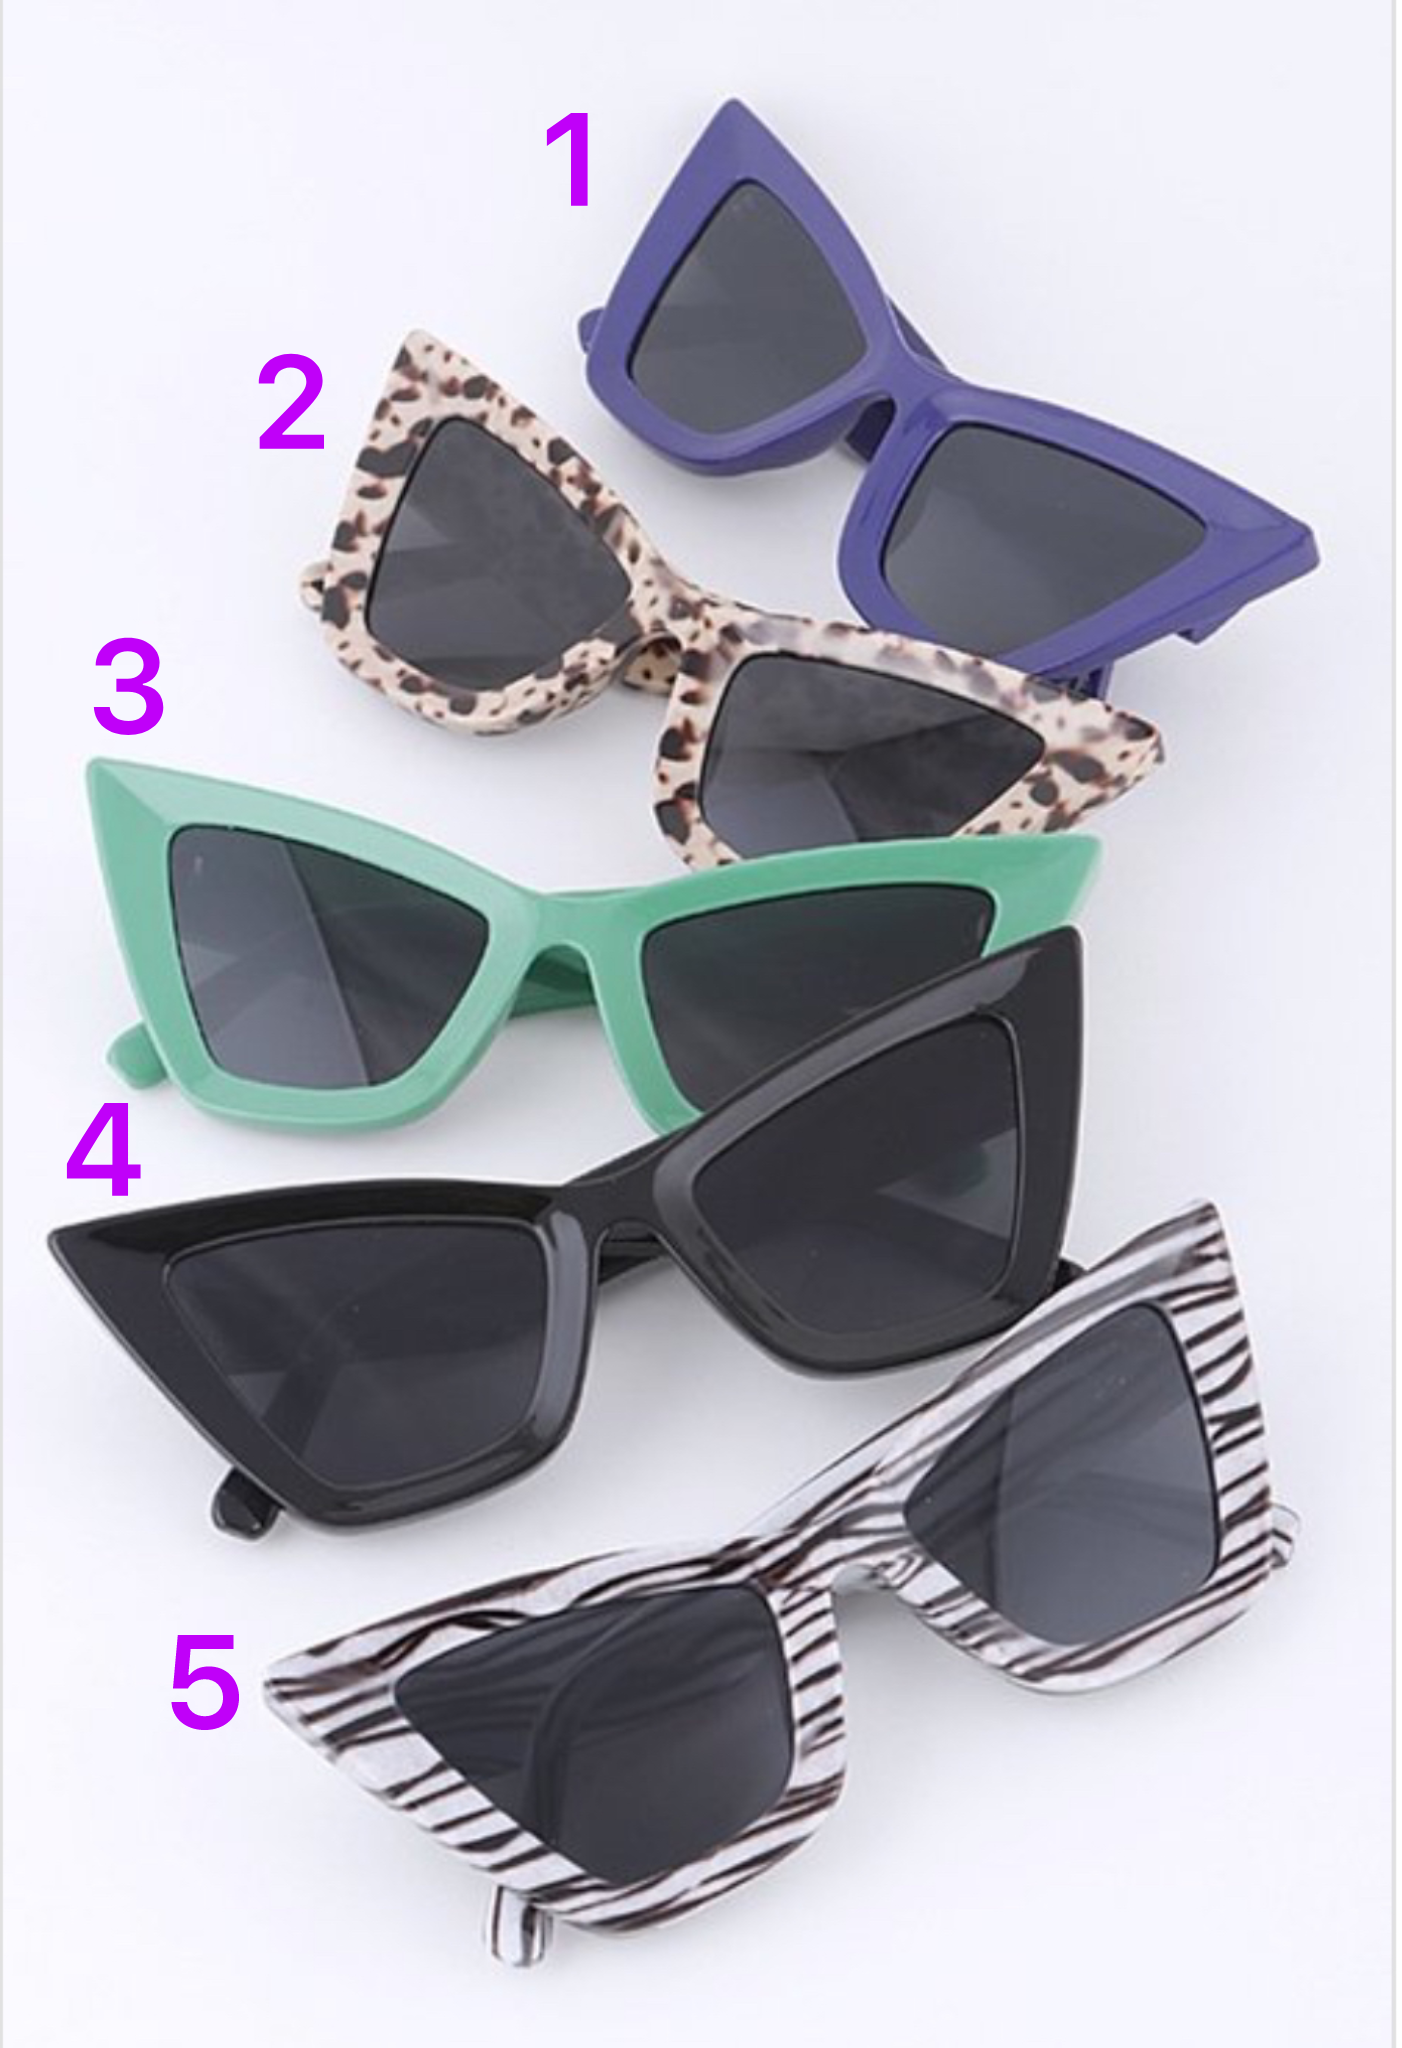 Cat eye sunglasses. Cat eye shades. Pointy cat eye sunglasses. Vibrant sunglasses. Retro sunglasses. Fashion sunglasses. Stylish sunglasses. 